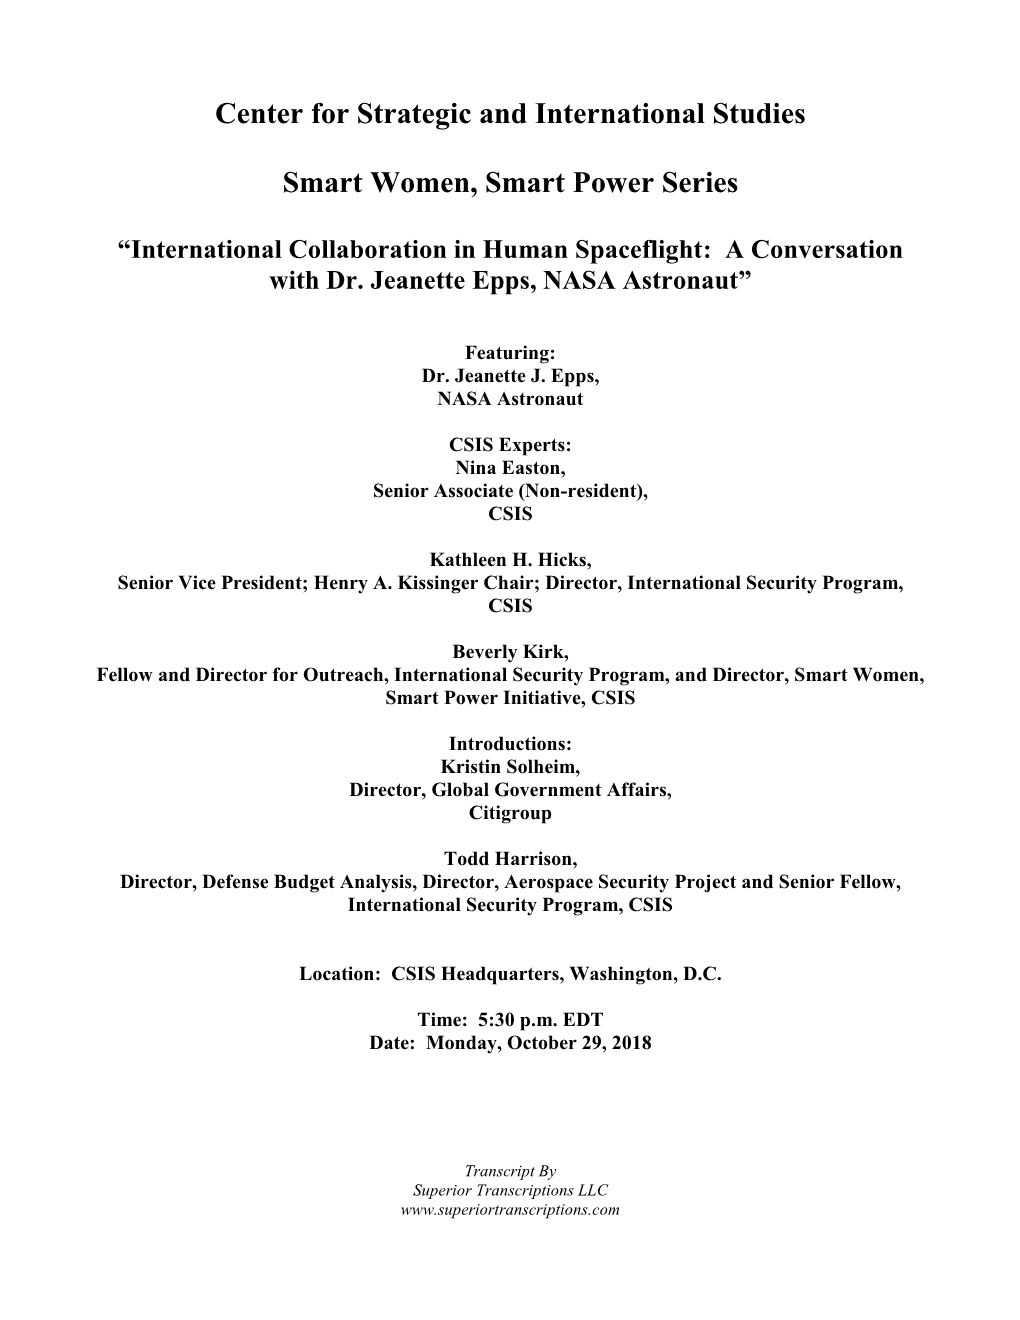 Center for Strategic and International Studies Smart Women, Smart Power Series